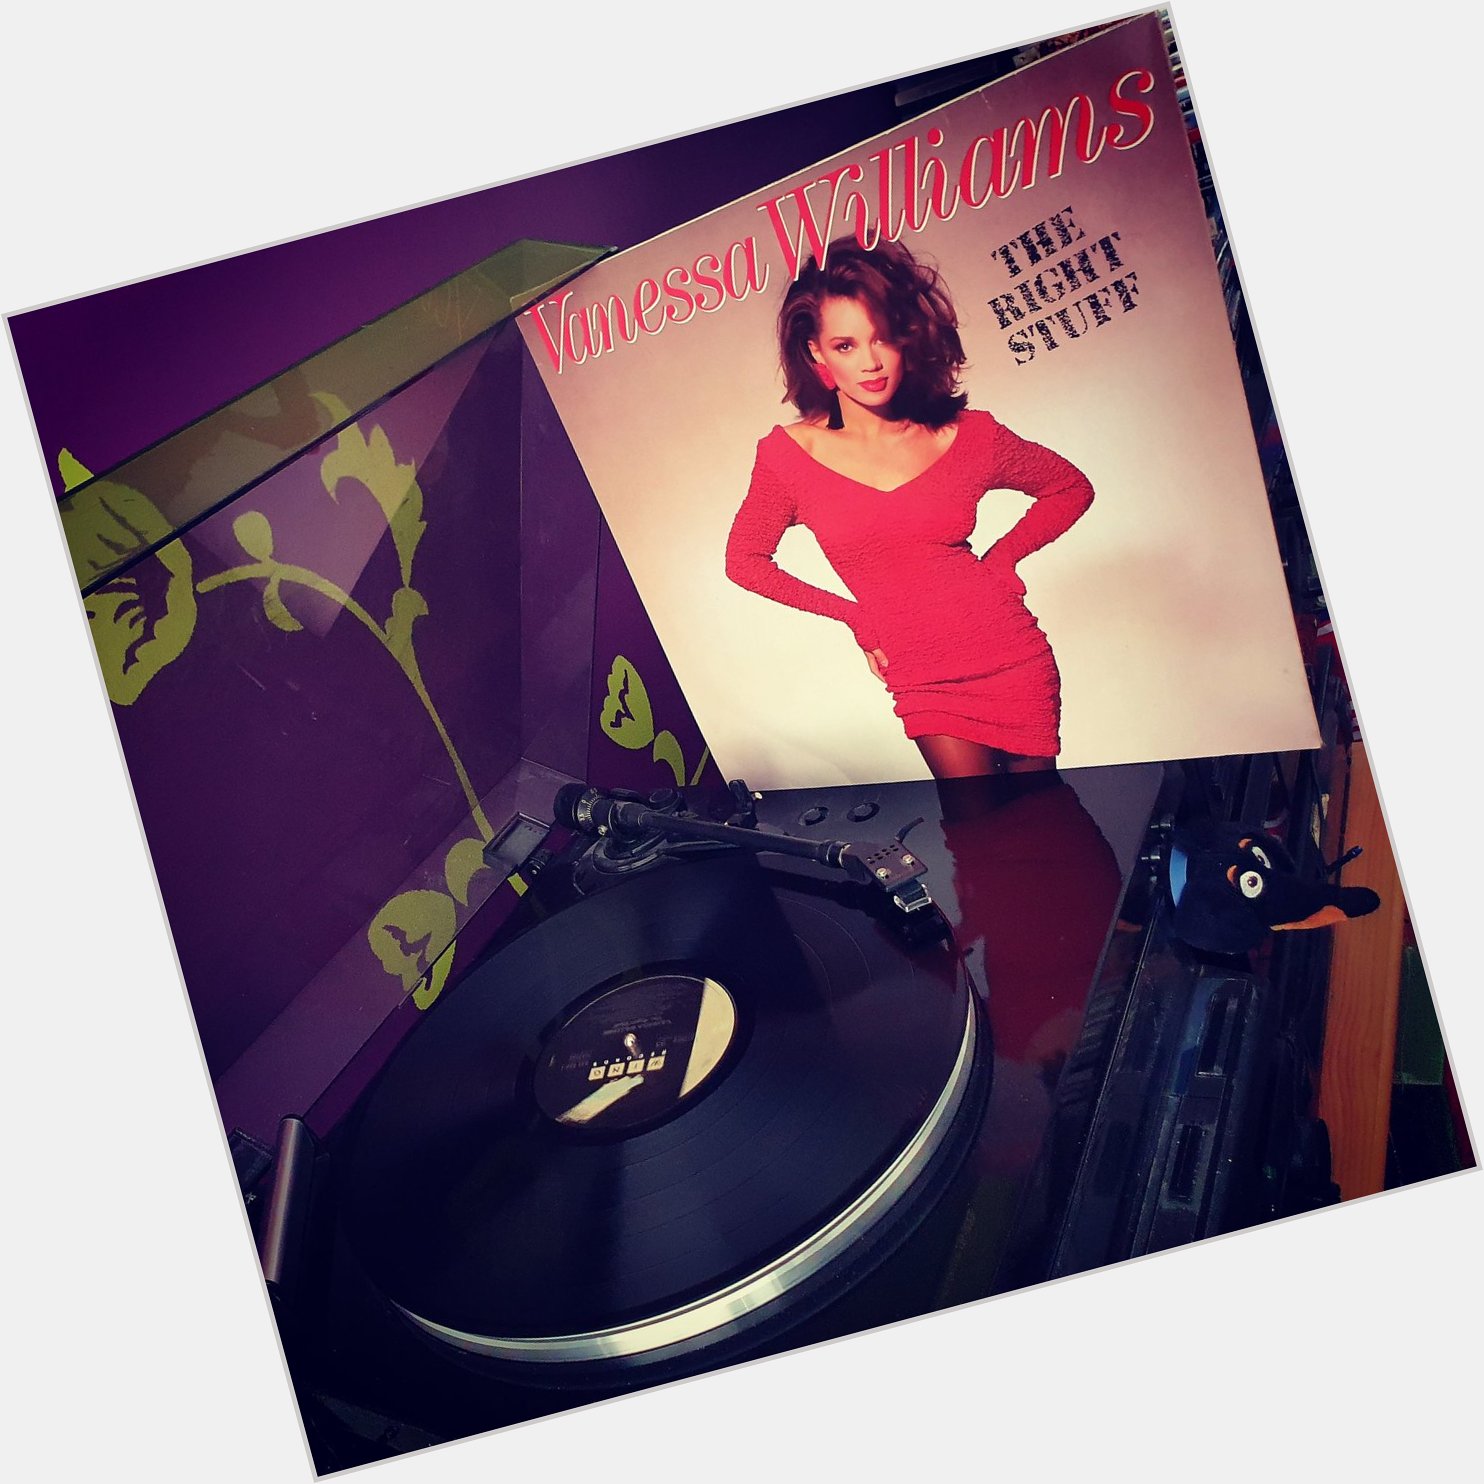 Happy Birthday Vanessa Williams *57*!
The Right Stuff (Wing Records/Polygram/1988)  